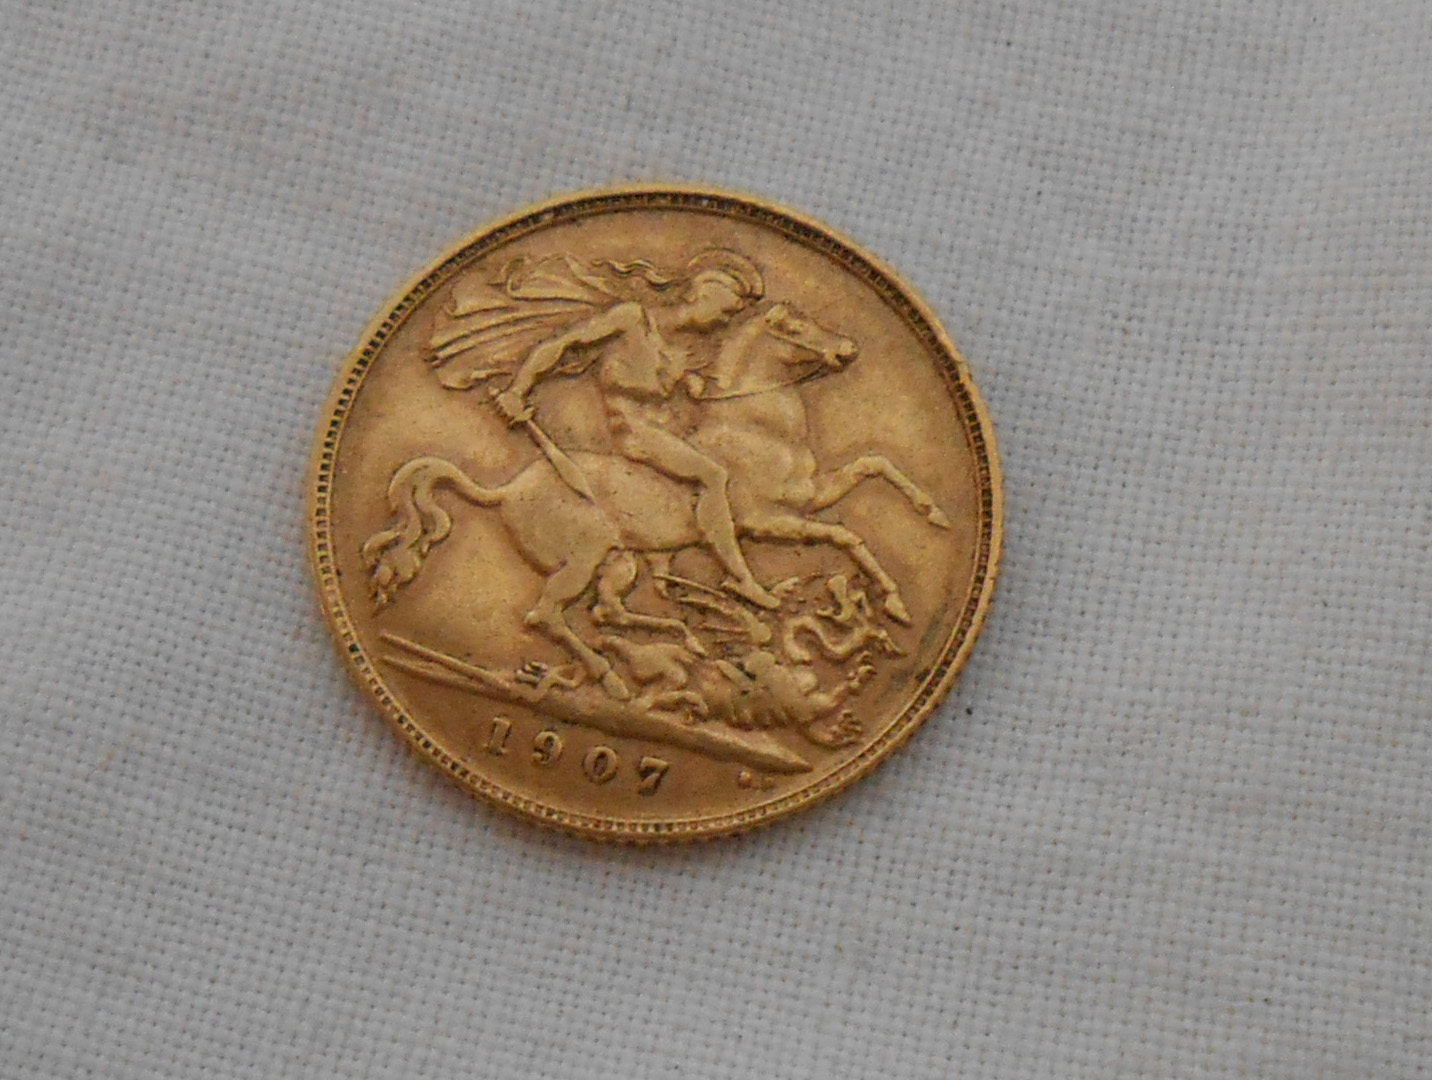 1907 gold half sovereign